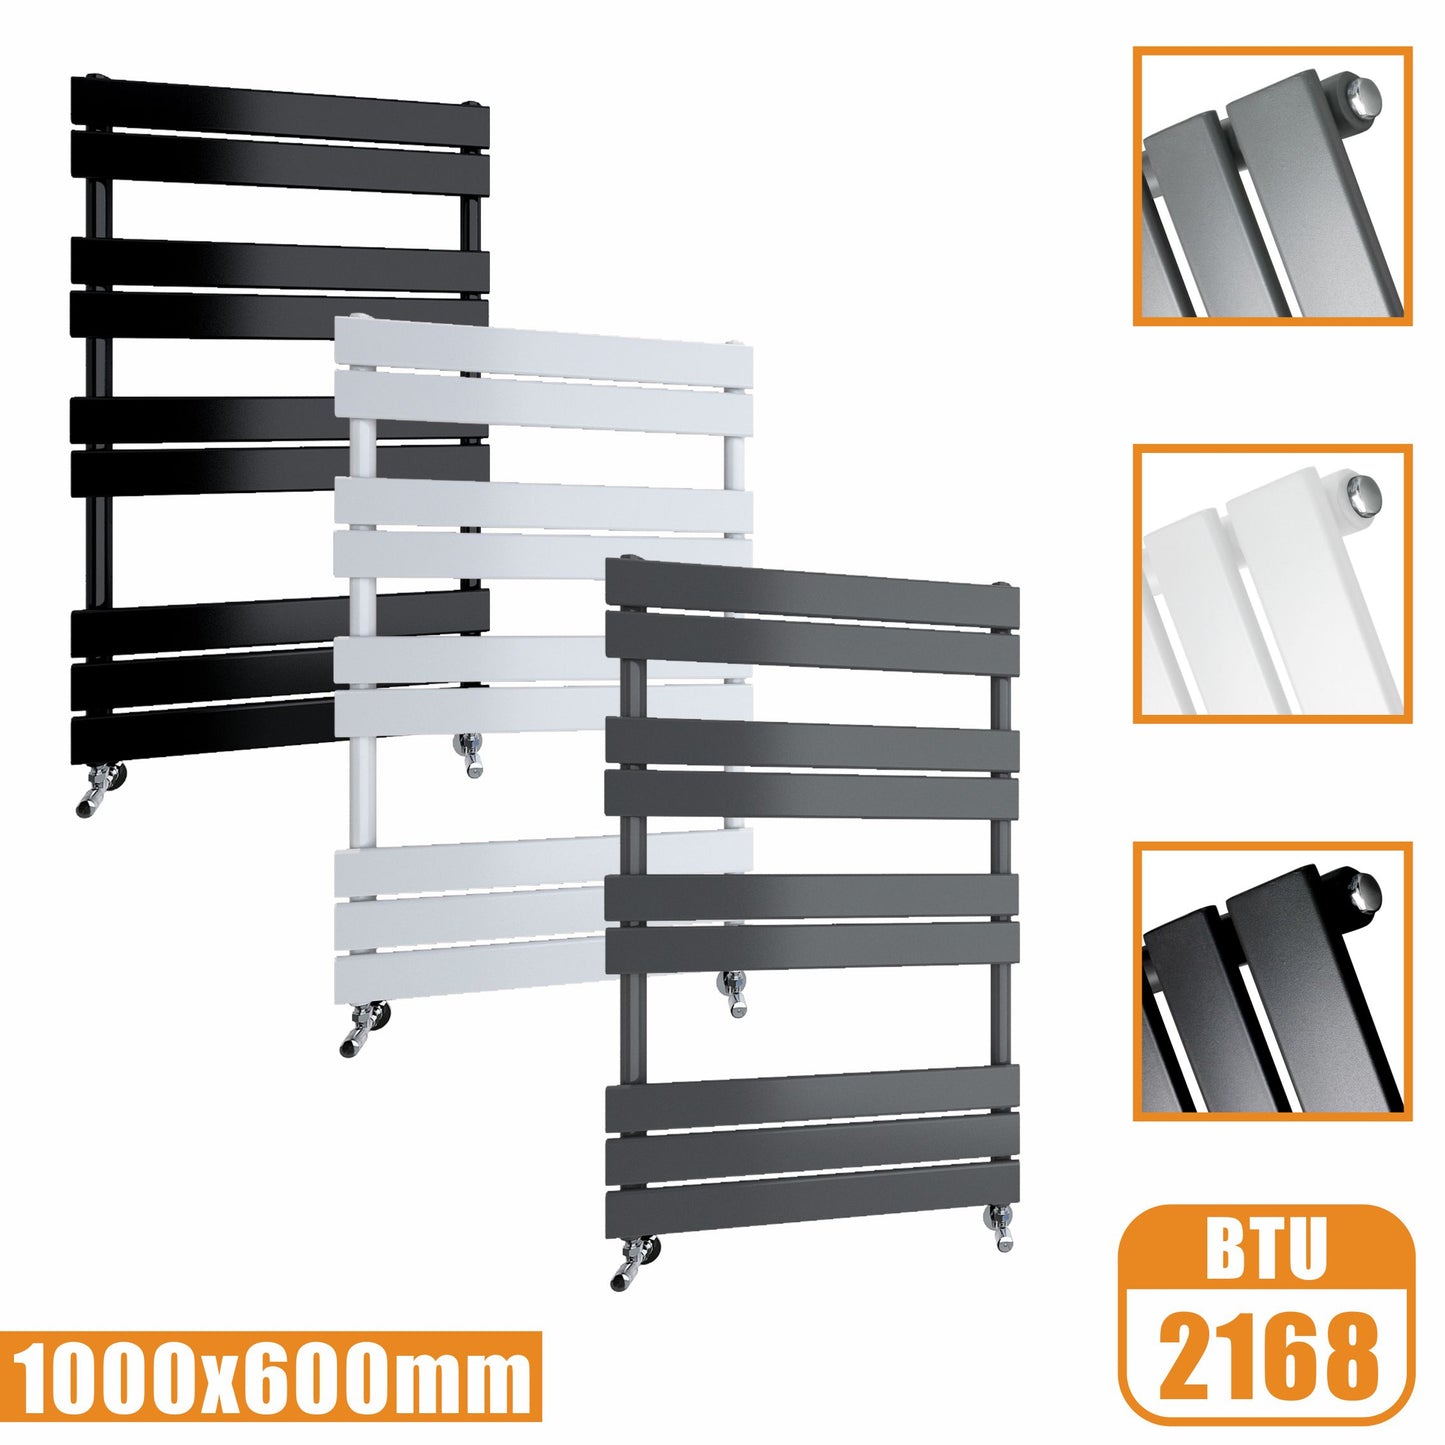 Flat Panel Heated Towel Rail ladder Radiator Anthracite White Black 1000x600MM AICA